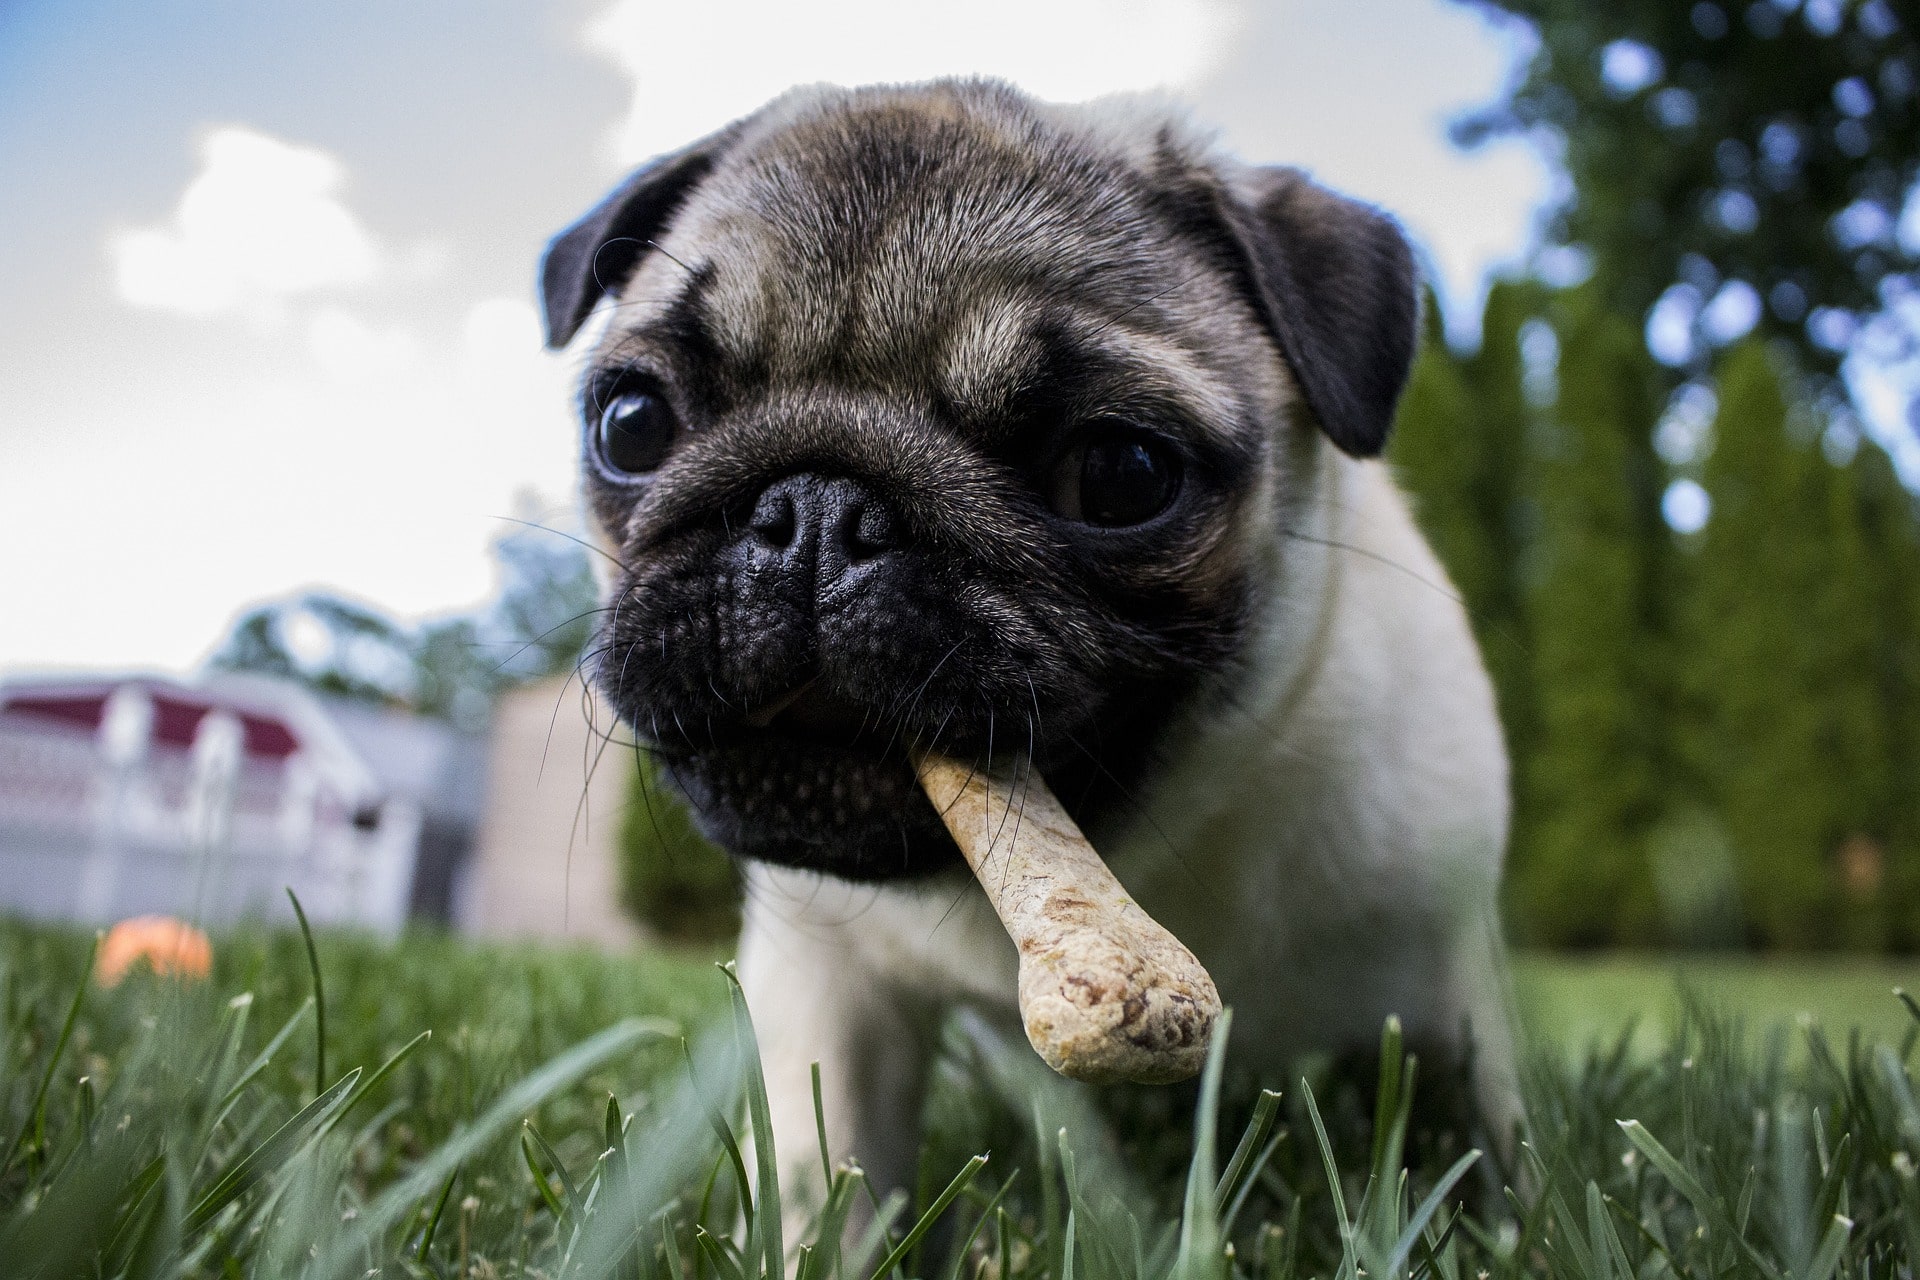 A Pug puppy eating a bone treat.